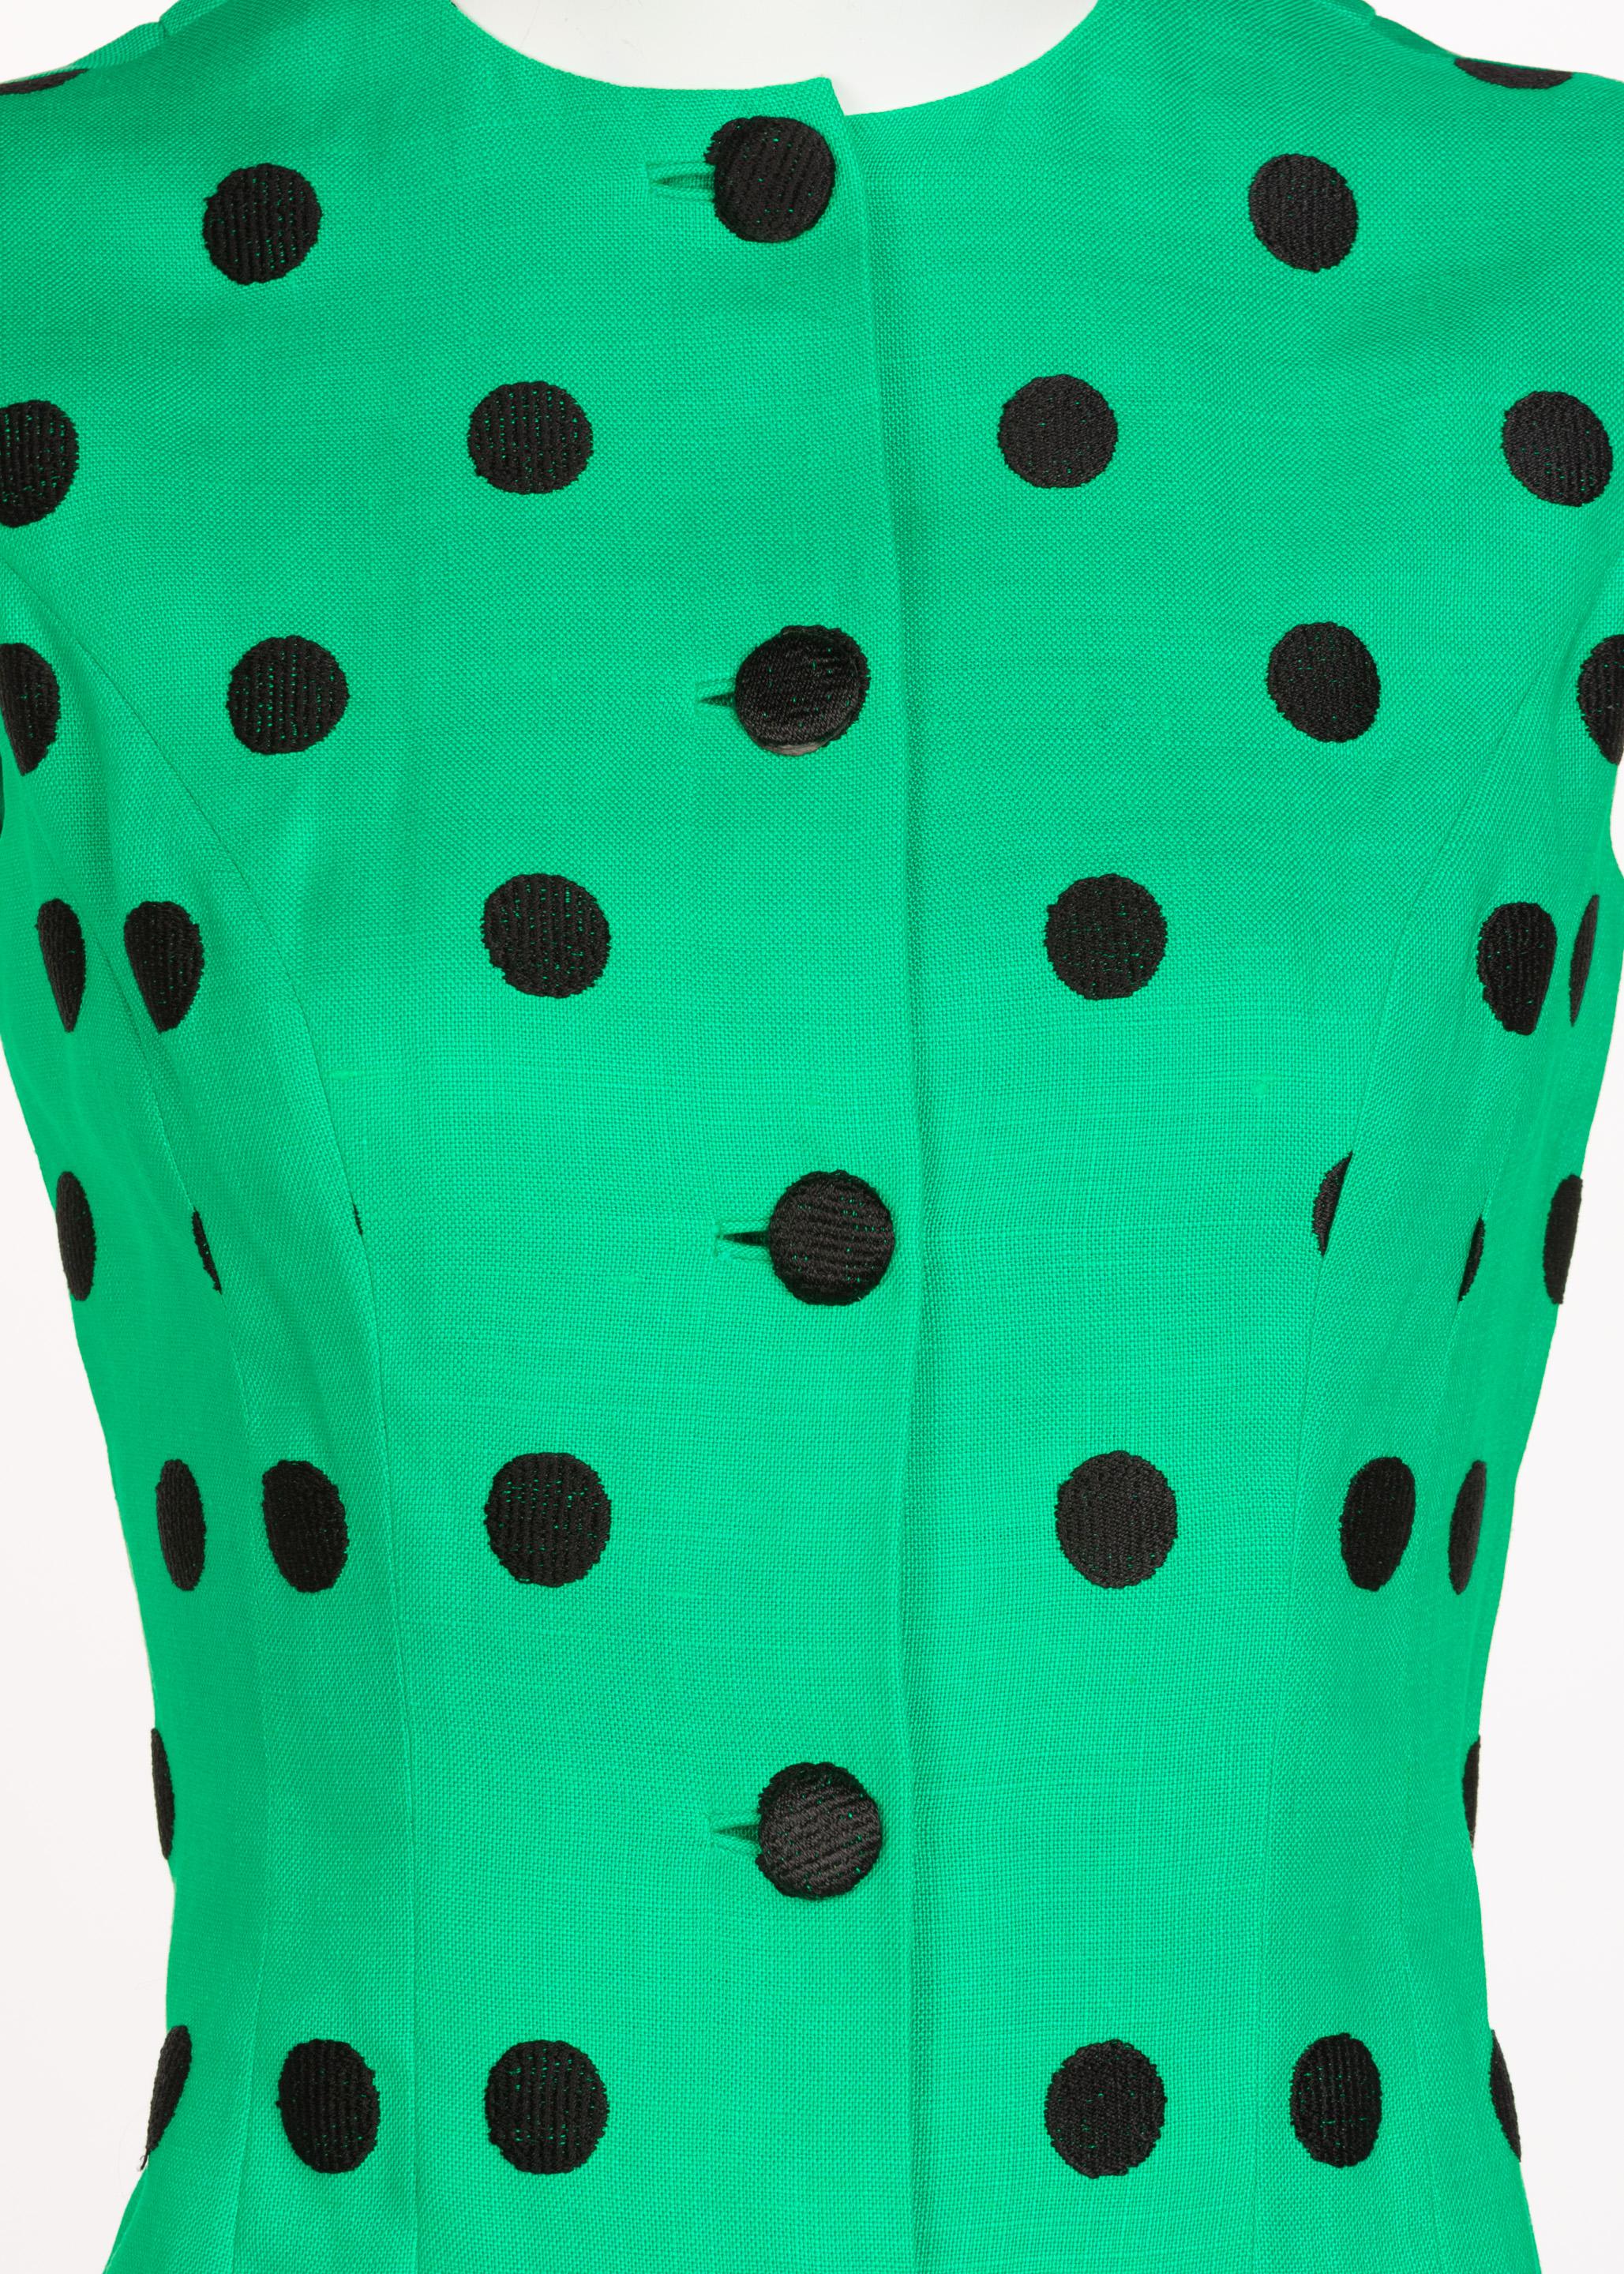 Blue Pauline Trigere Black Polka Dot Green Linen Dress, 1960s